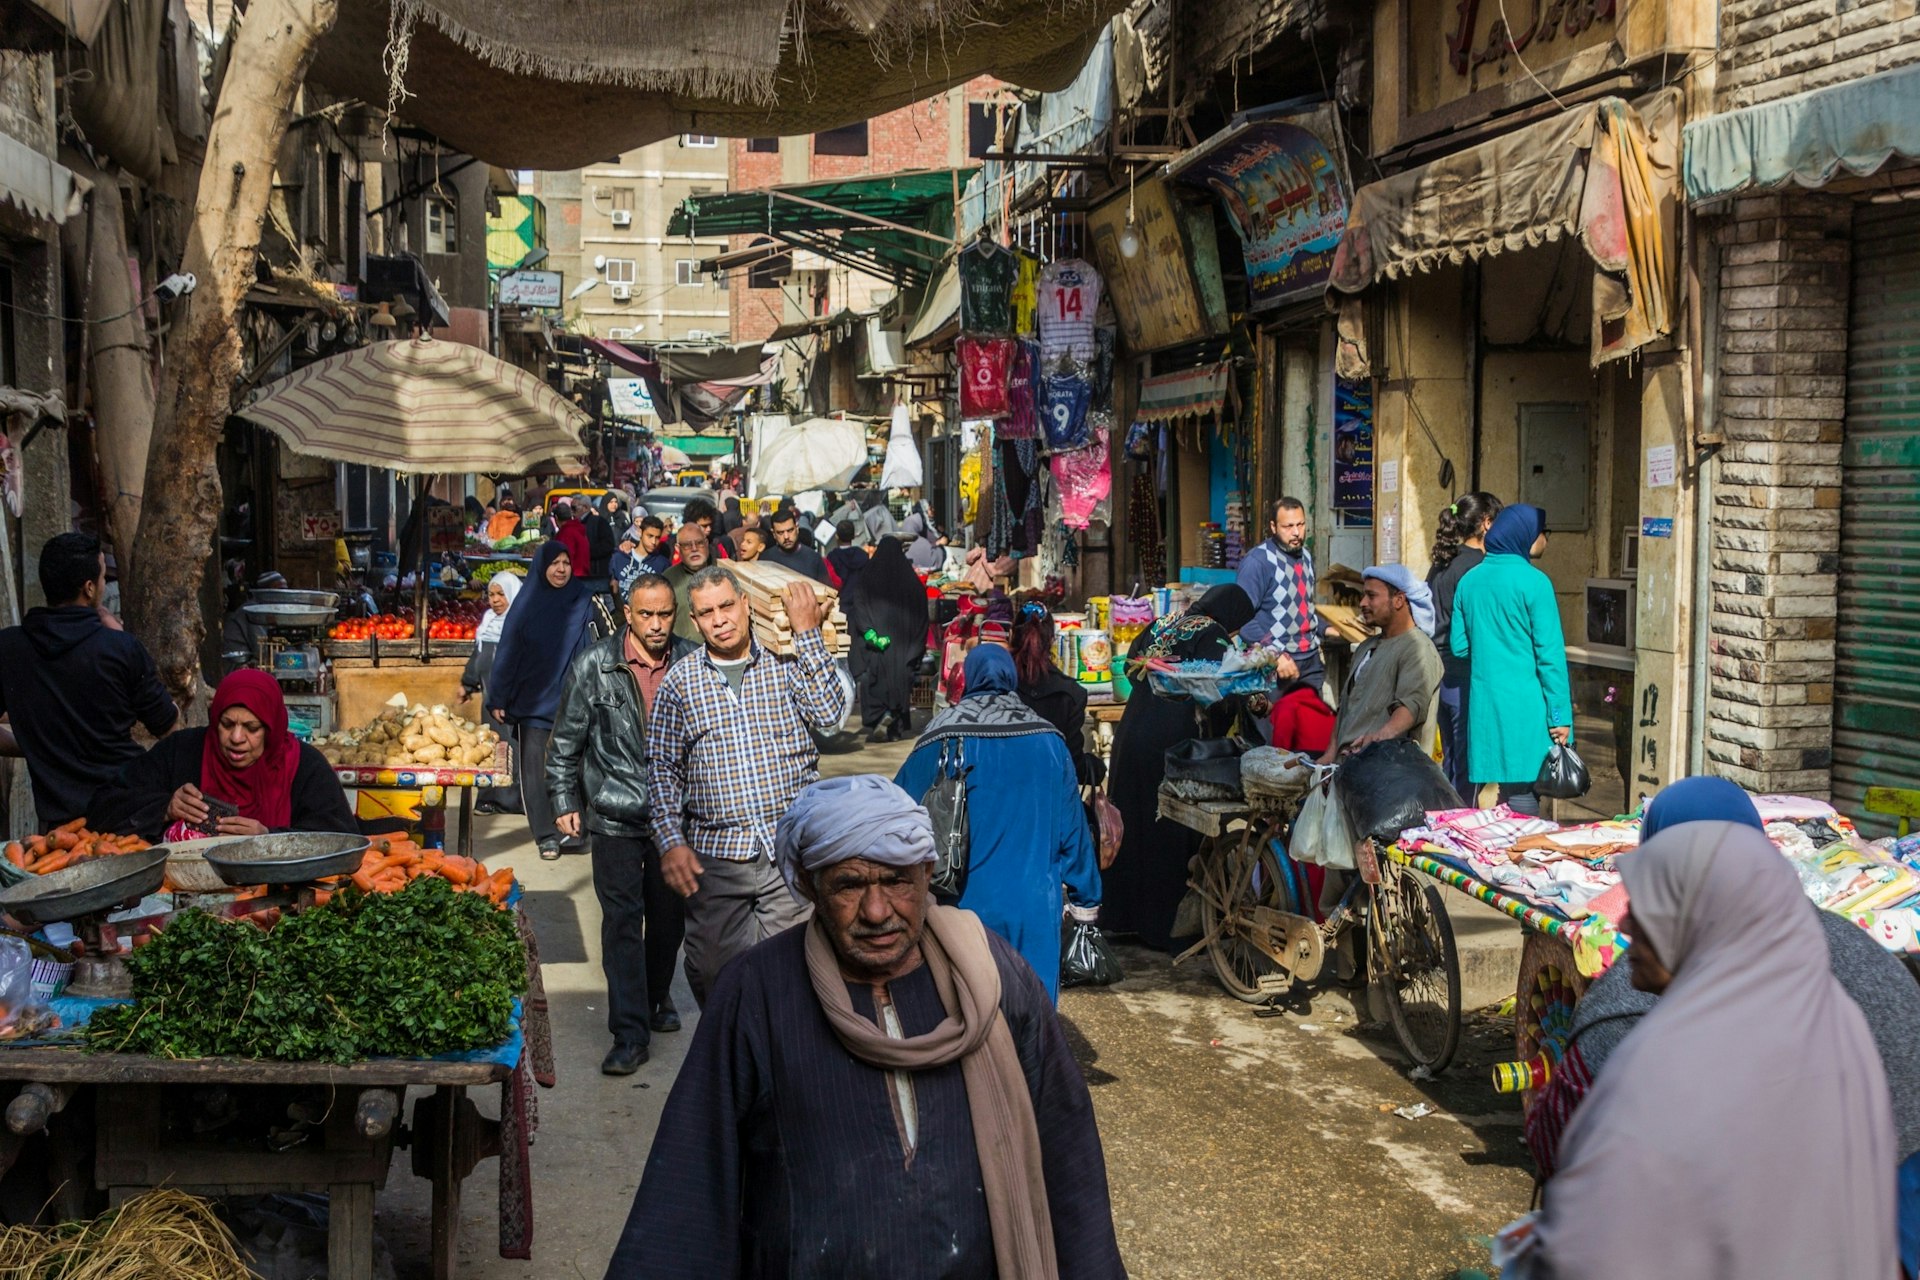 El-Khayamiya (Tentmakers) street in Cairo, Egypt